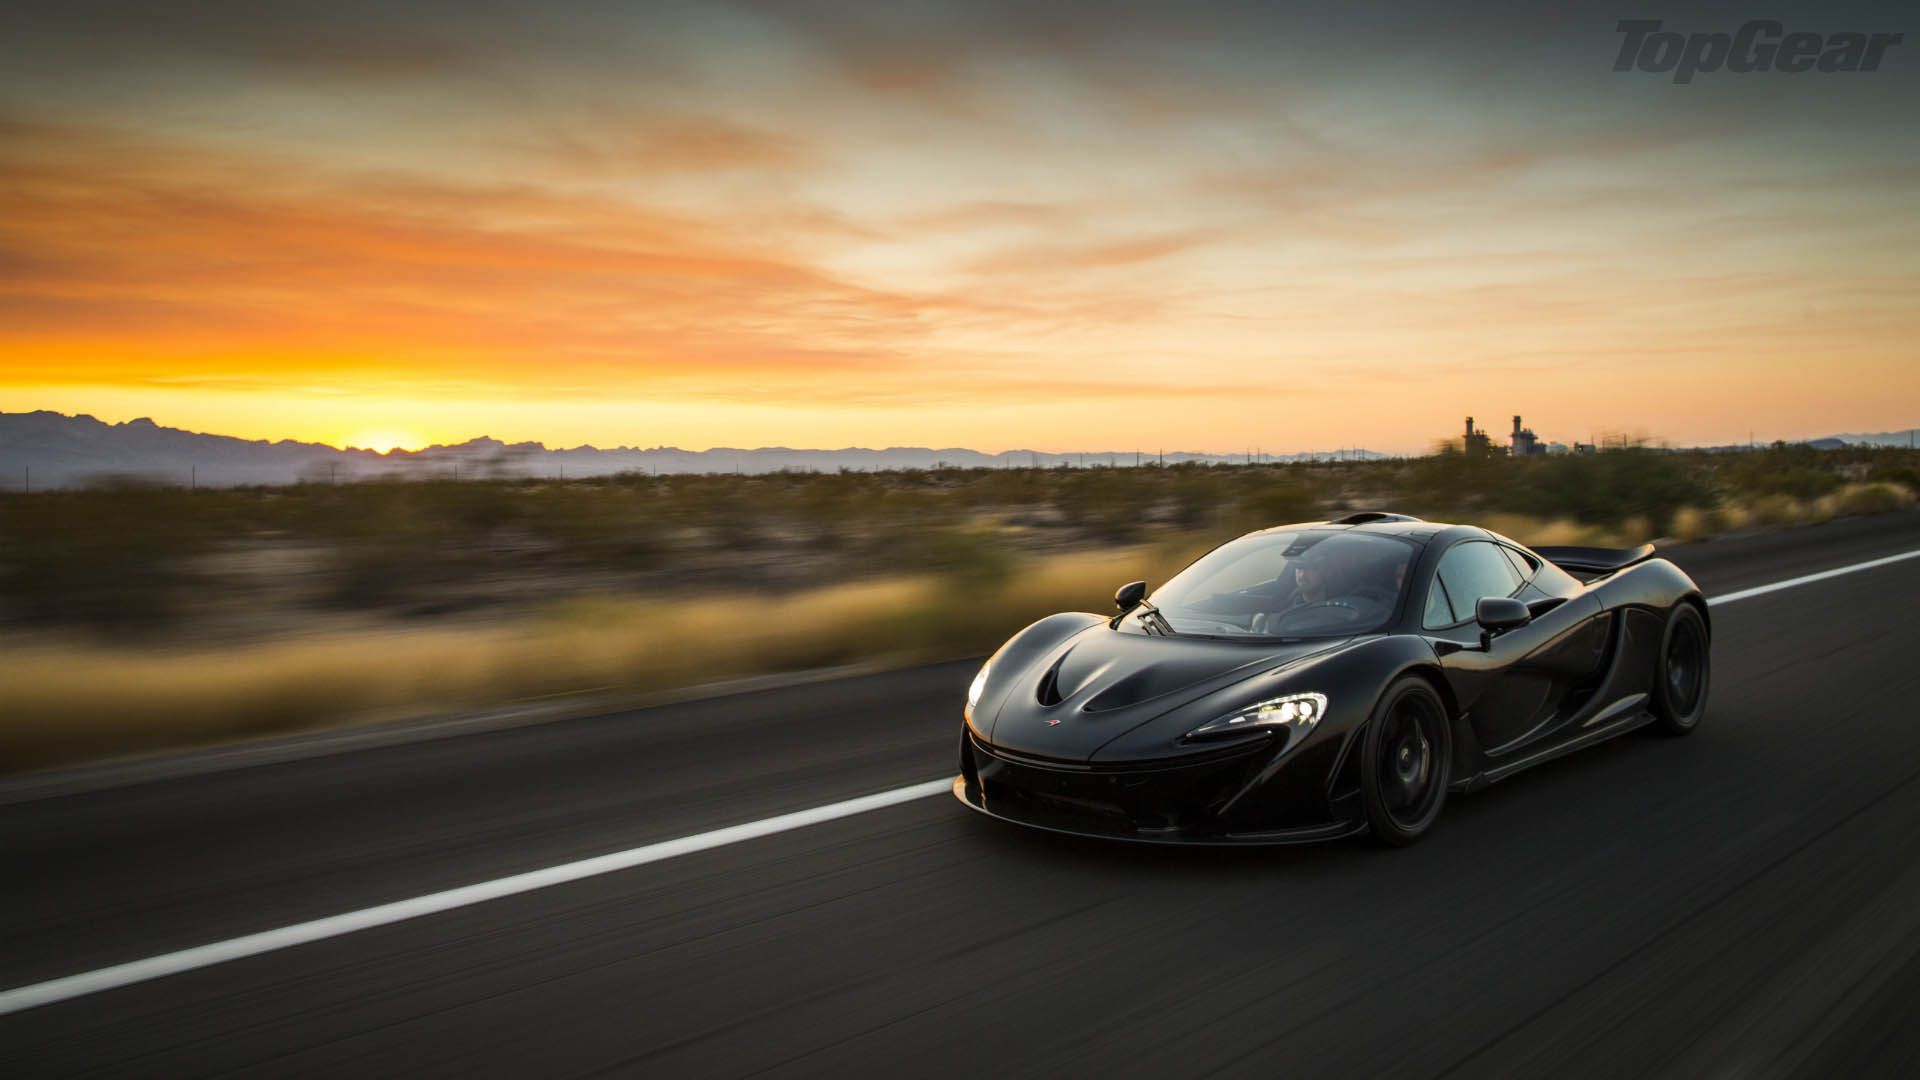 Top Gear Supercar: Black McLaren P1 at Sunrise - 1920x1080 - Full ...